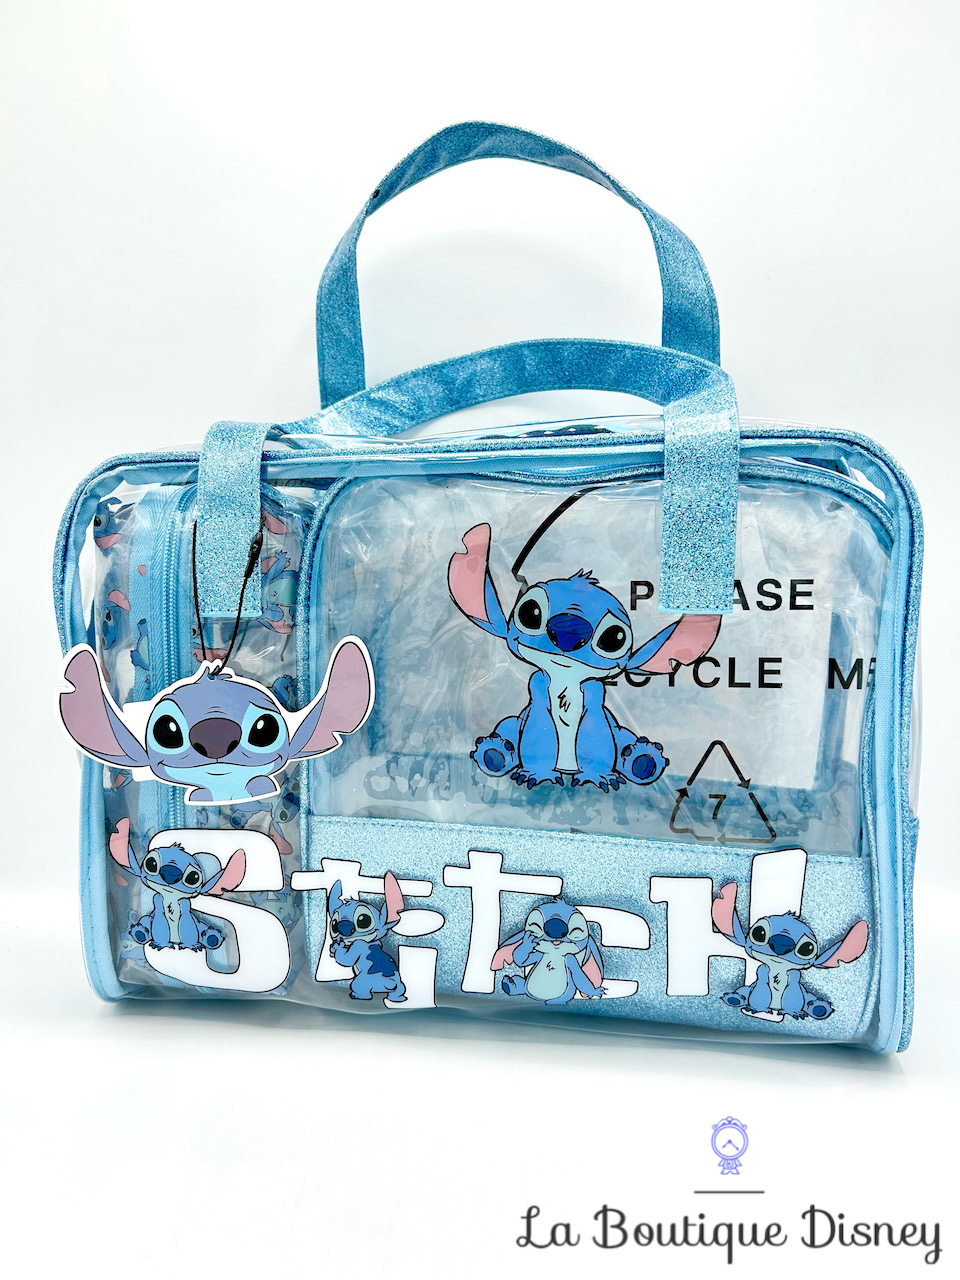 Sac Vanity Stitch Disney Primark trousse pochette bleu